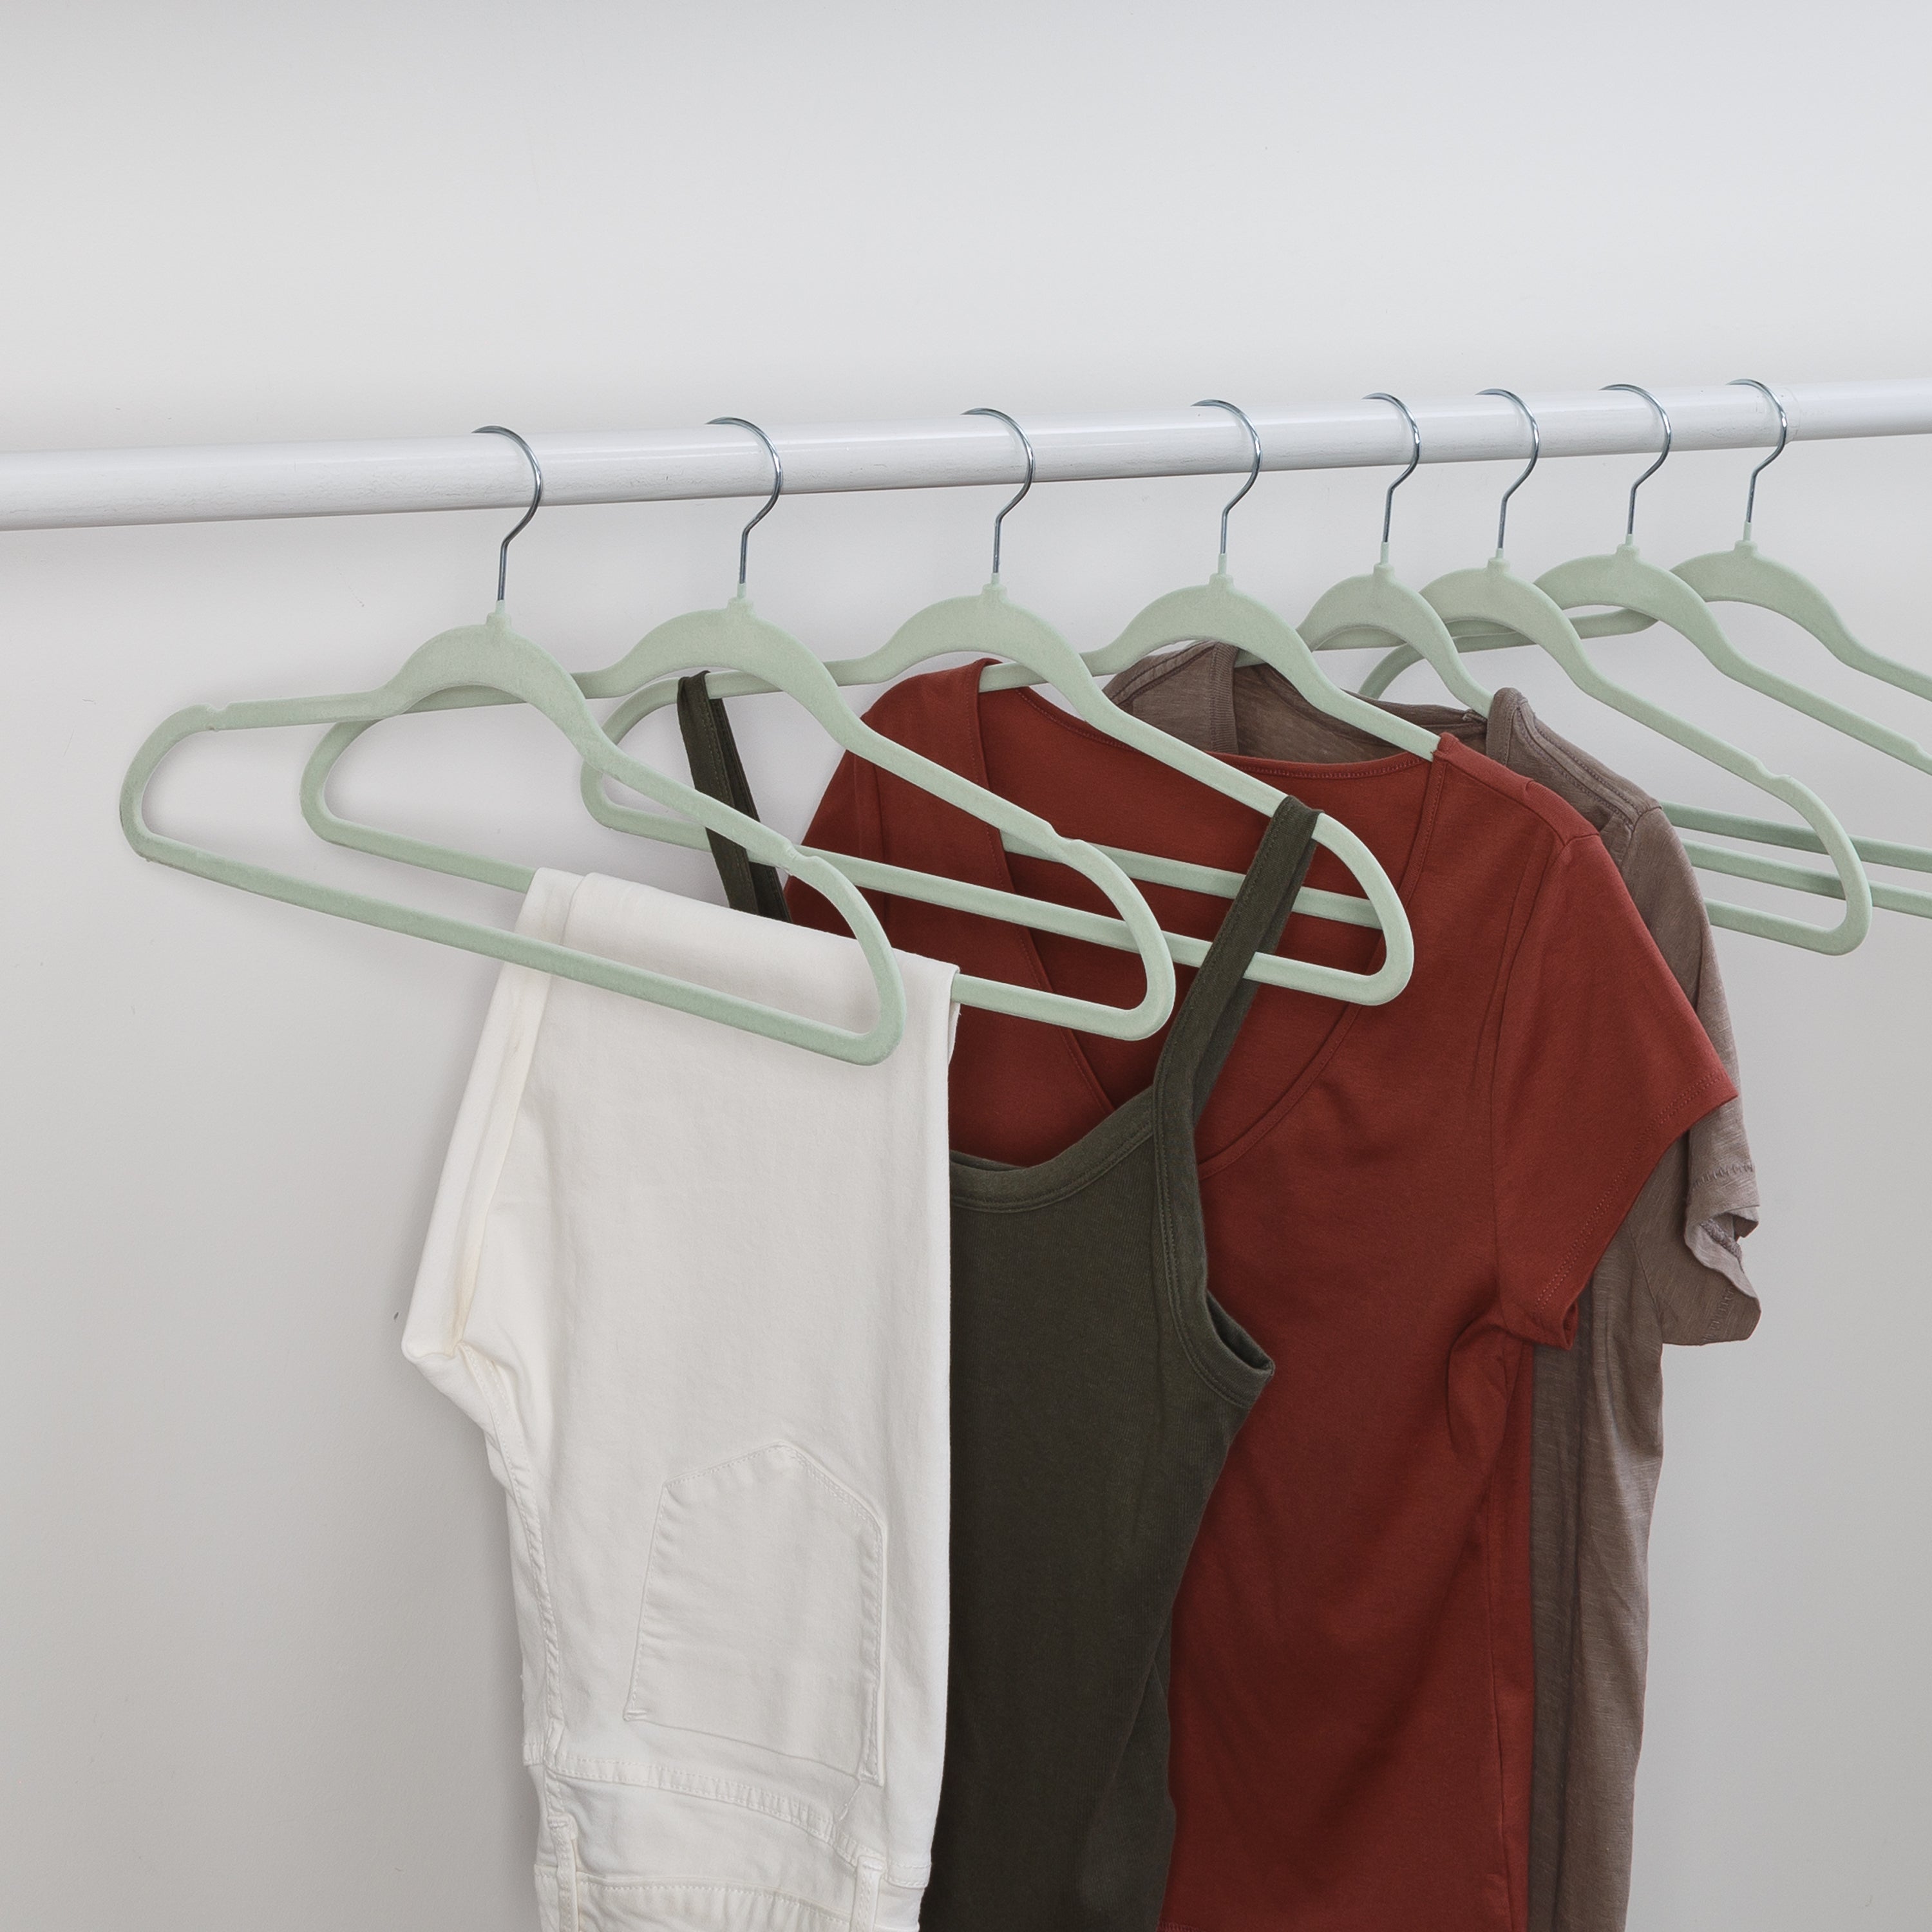 Better Homes & Gardens Non-Slip Clothes Hangers, 10 Pack, Black, Rubberized  Chrome 